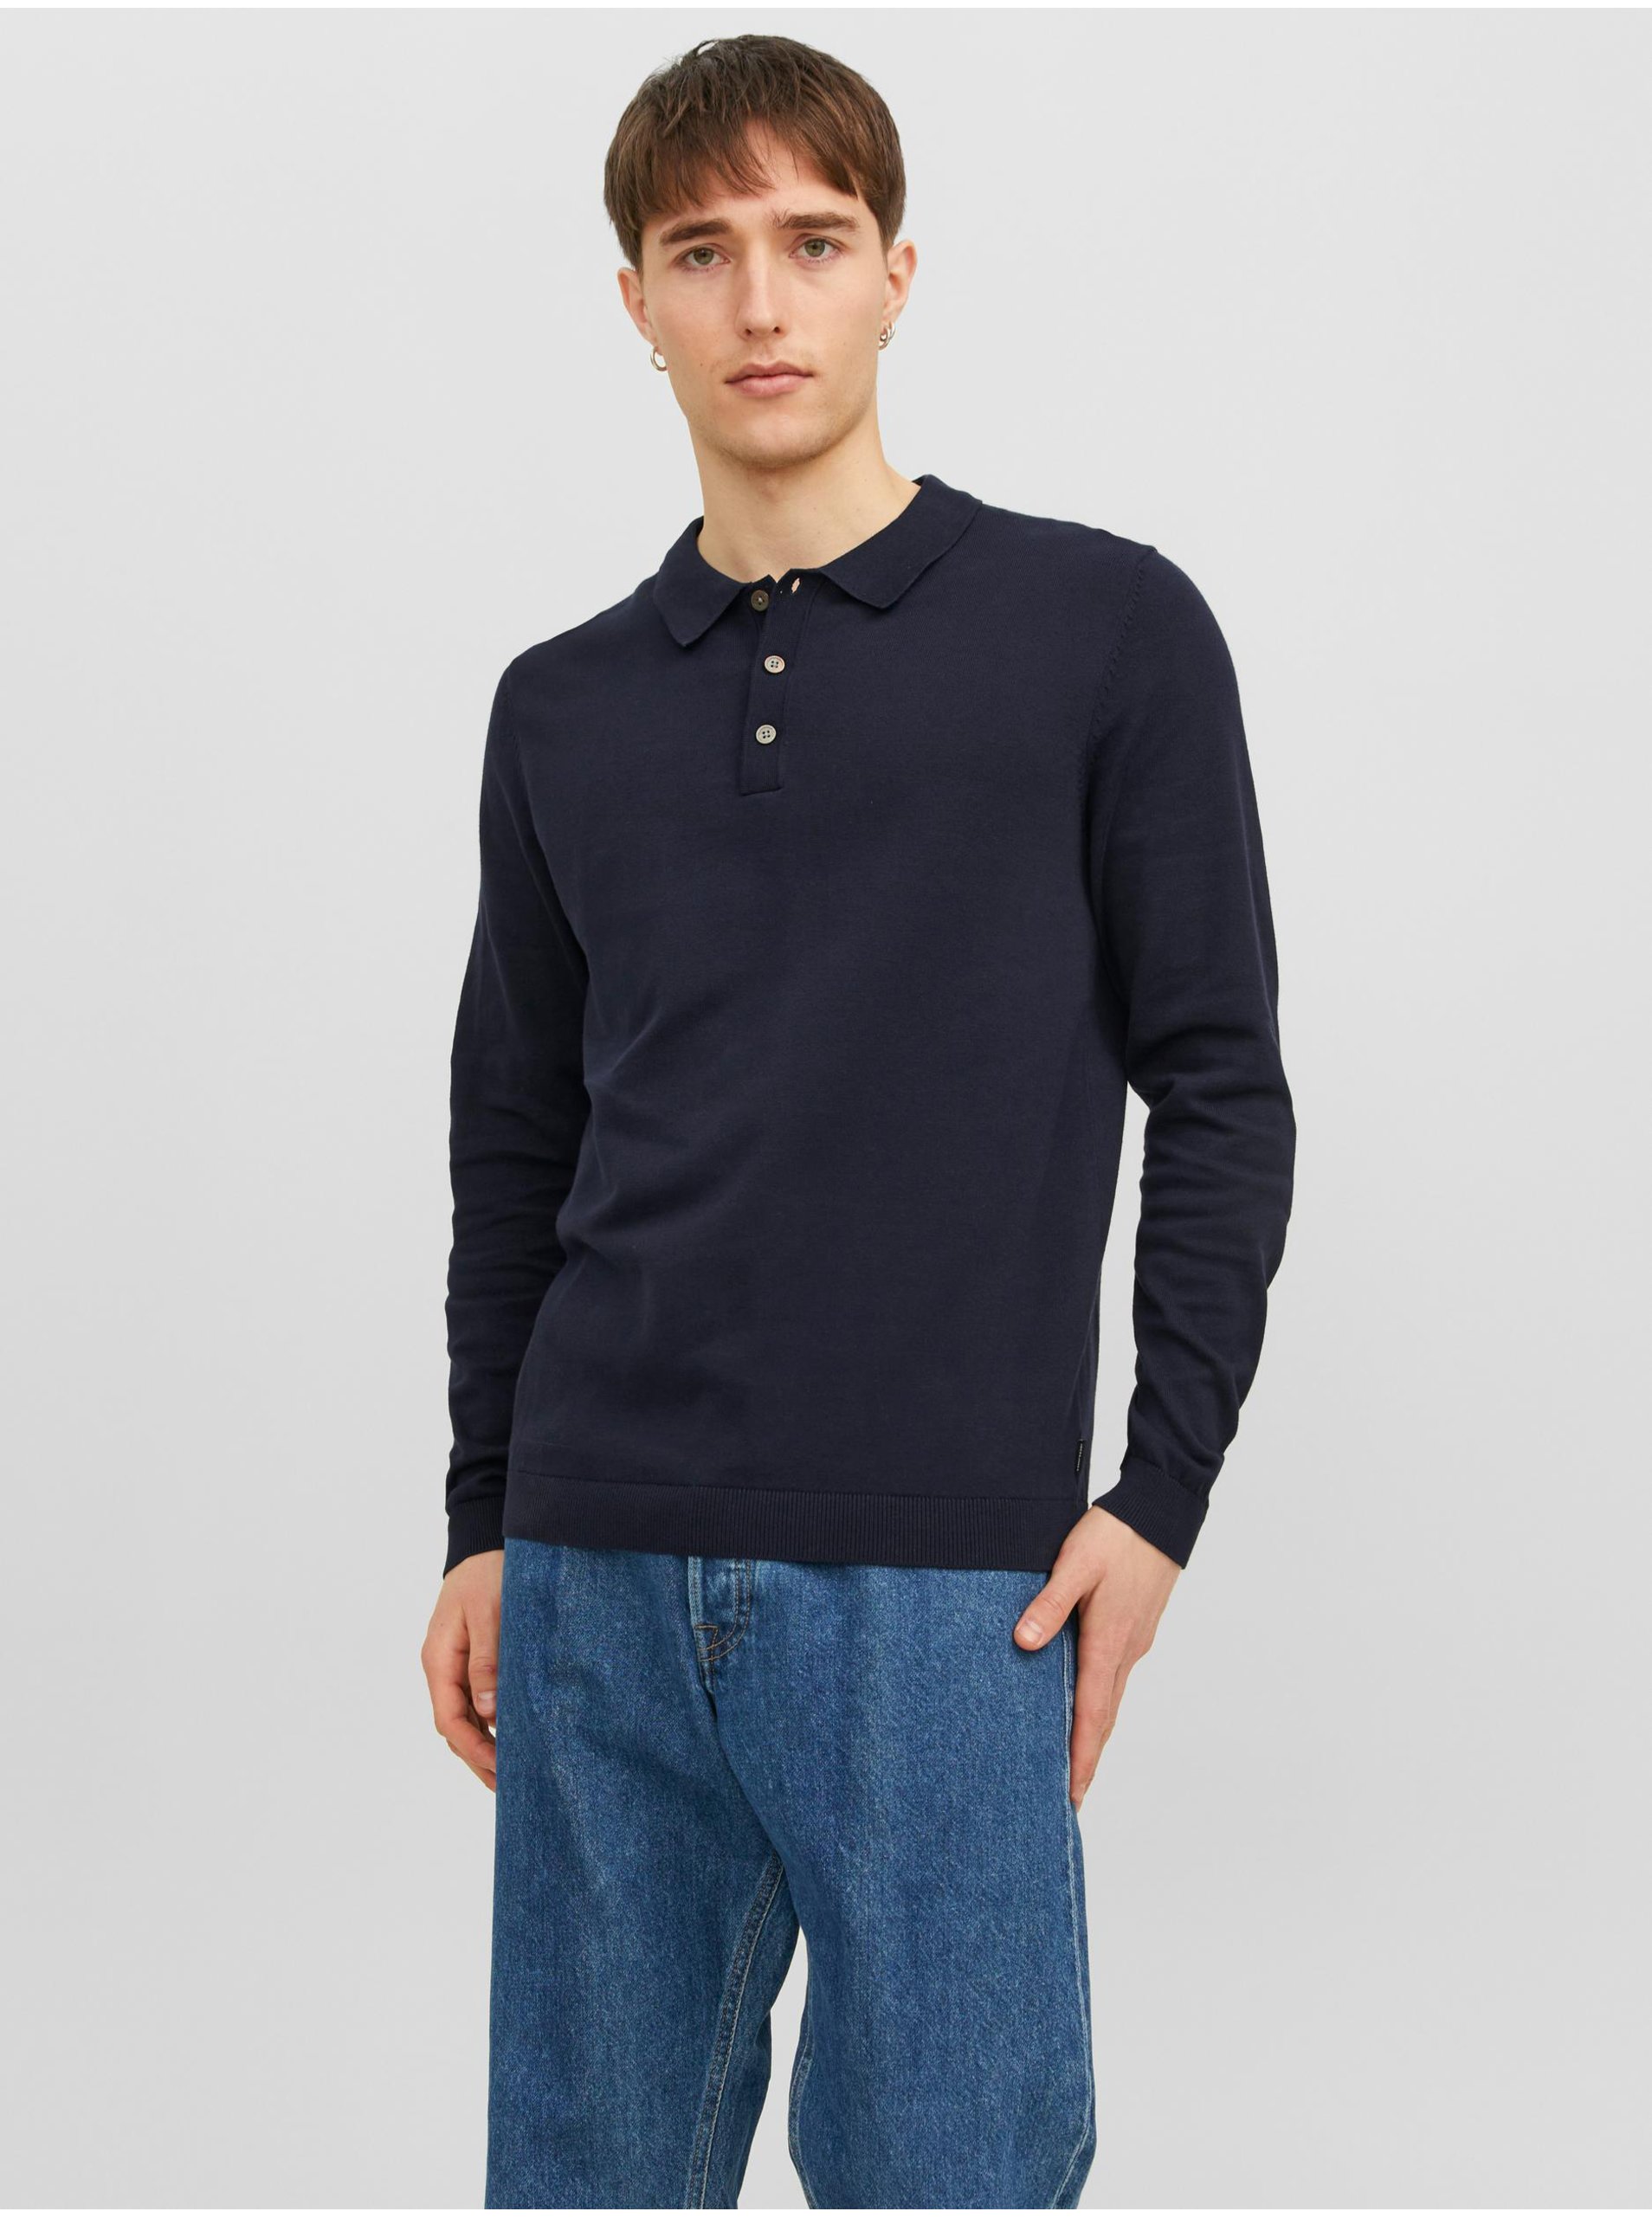 E-shop Tmavě modré pánské úpletové polo tričko s dlouhým rukávem Jack & Jones Blaigor